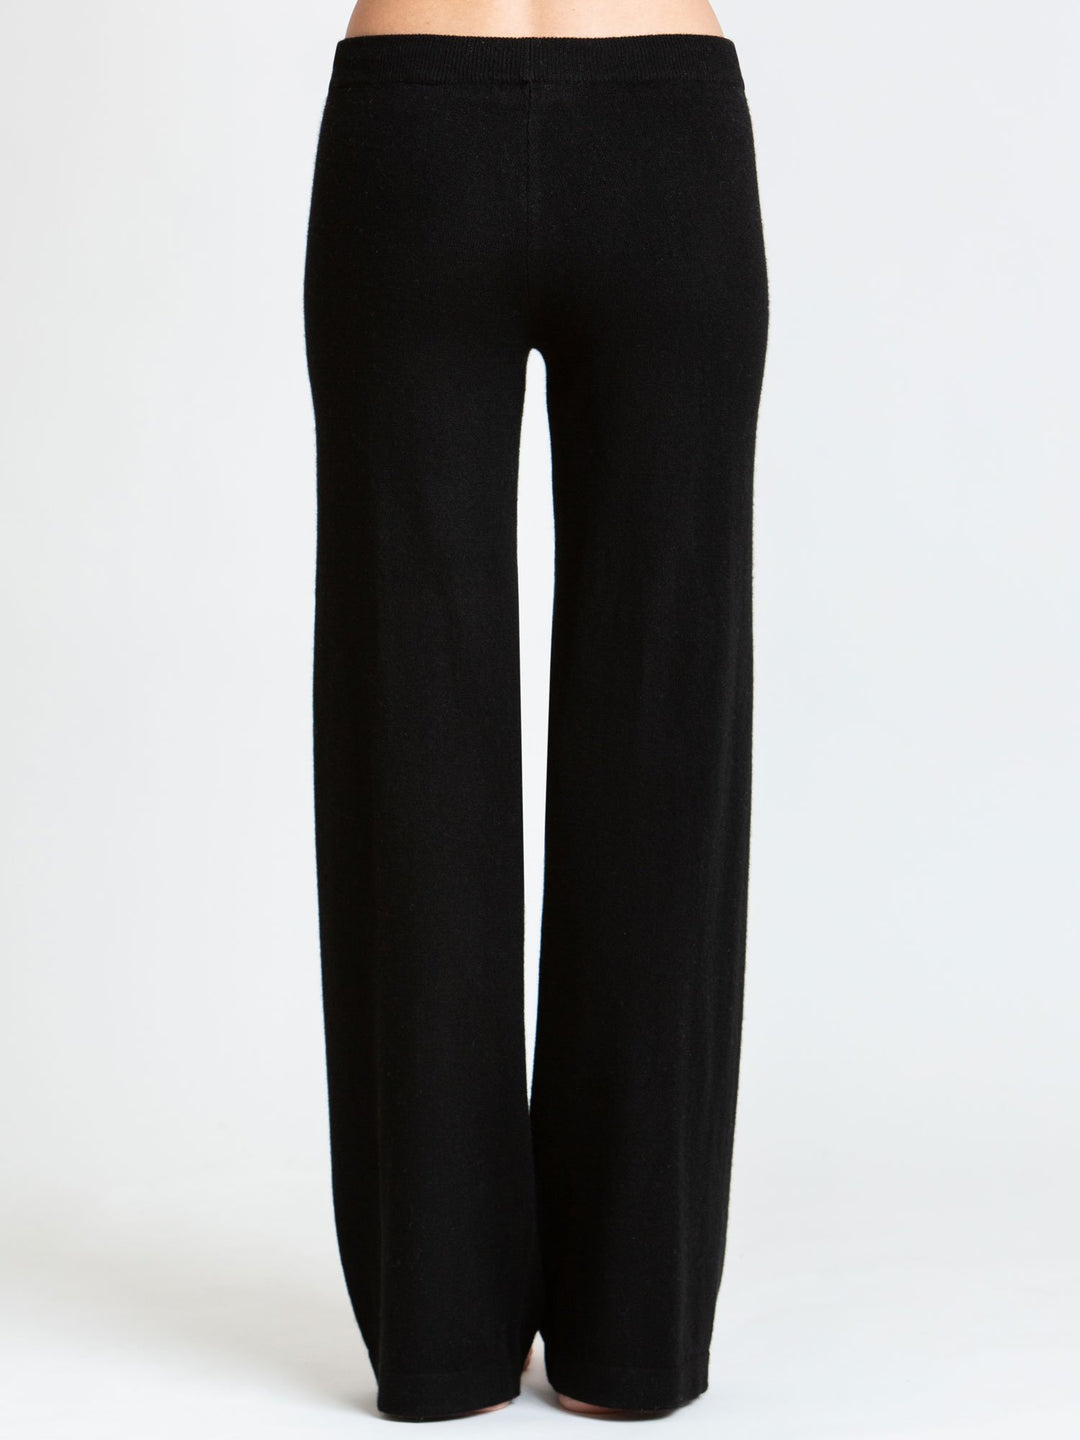 Manhattan cashmere trousers, black